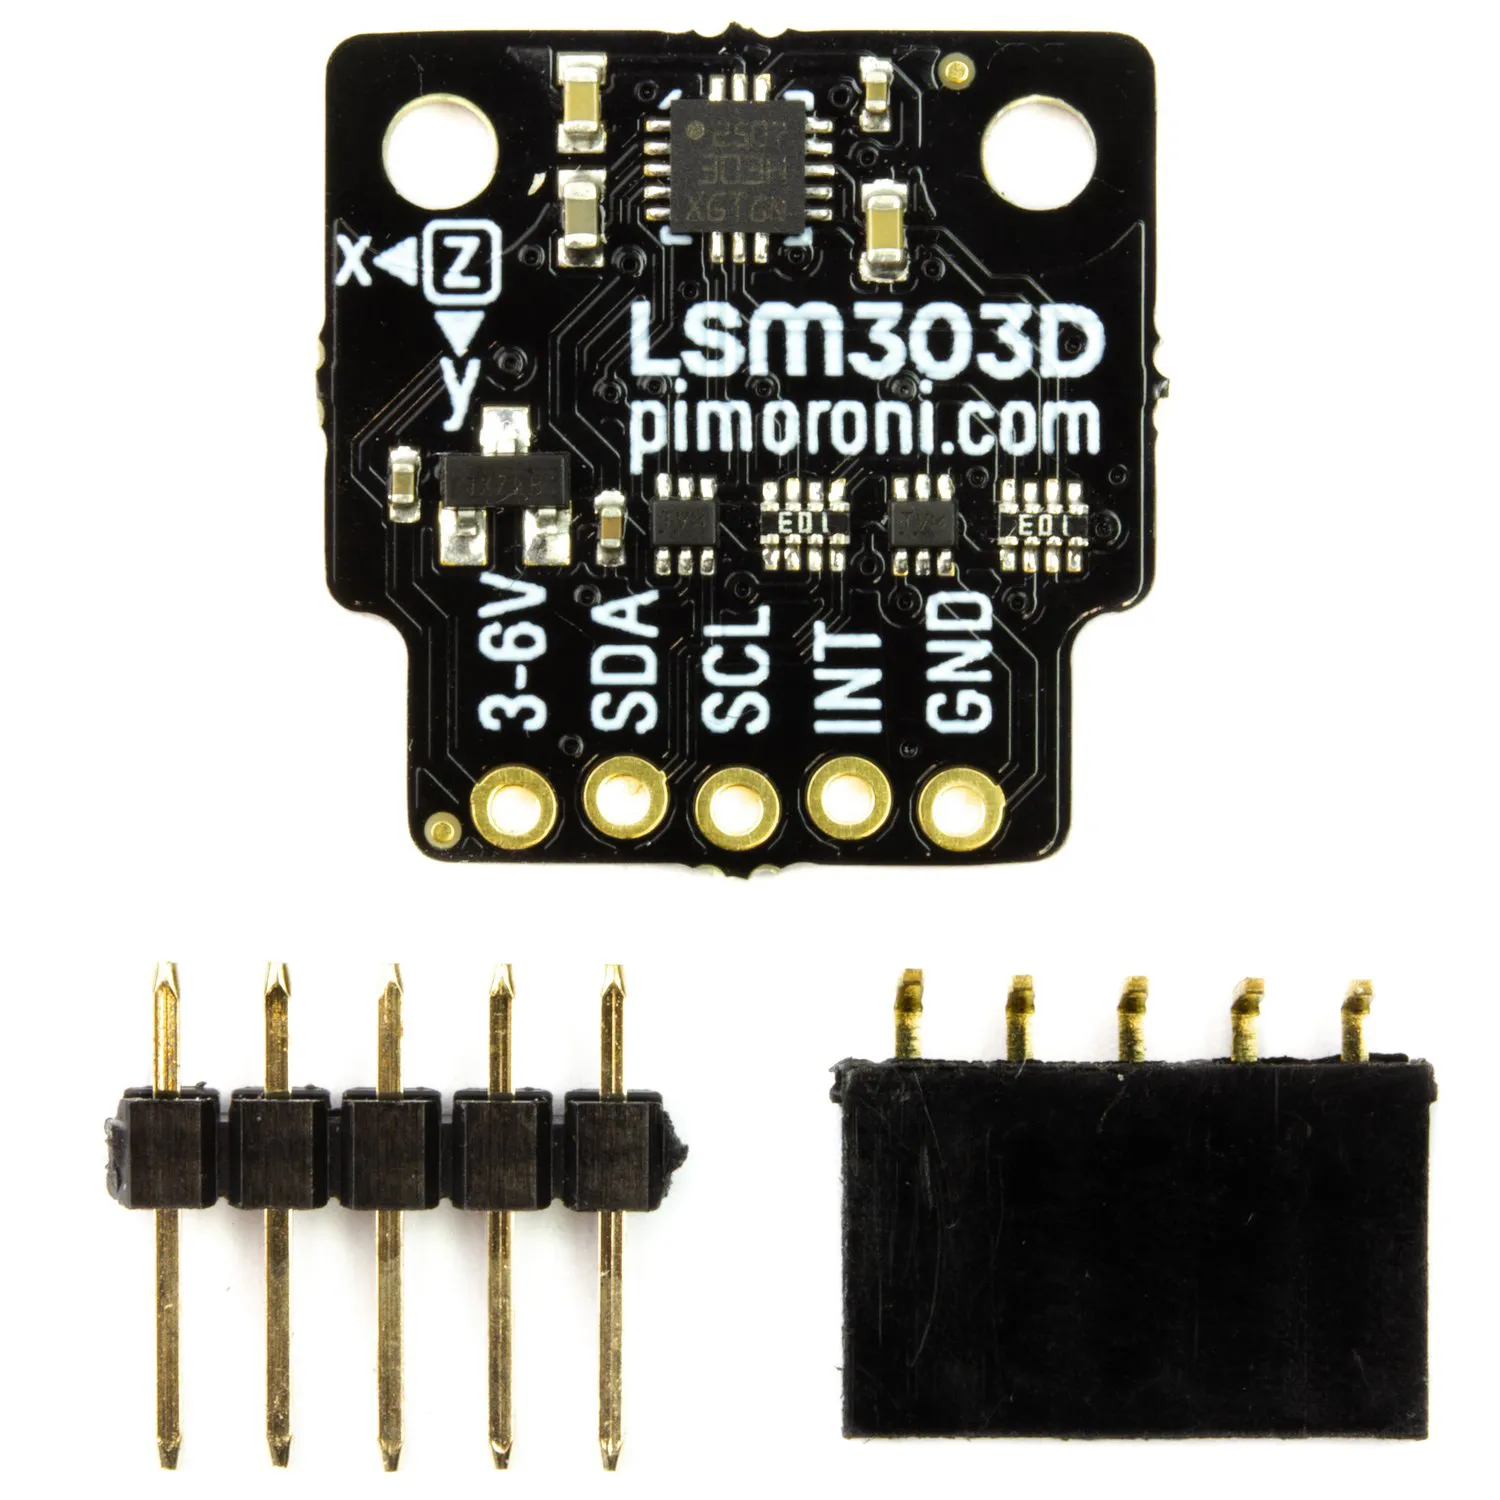 Photo of LSM303D 6DoF Motion Sensor Breakout